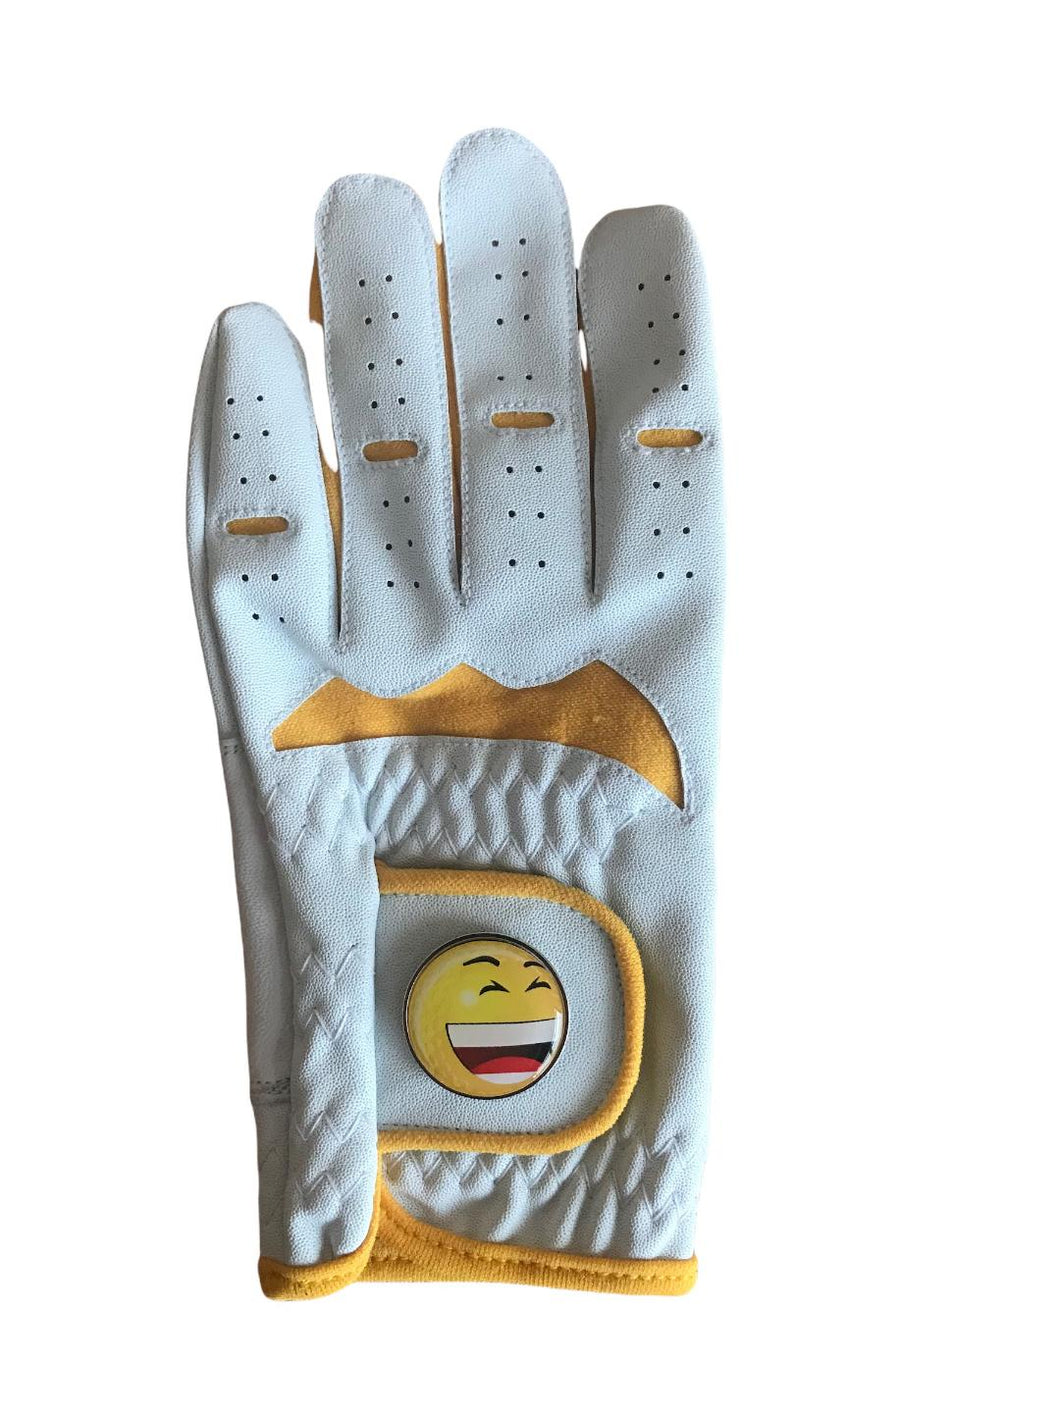 Girls Junior All Weather Golf Glove. Yellow Ball Marker. Small, Medium or Large.